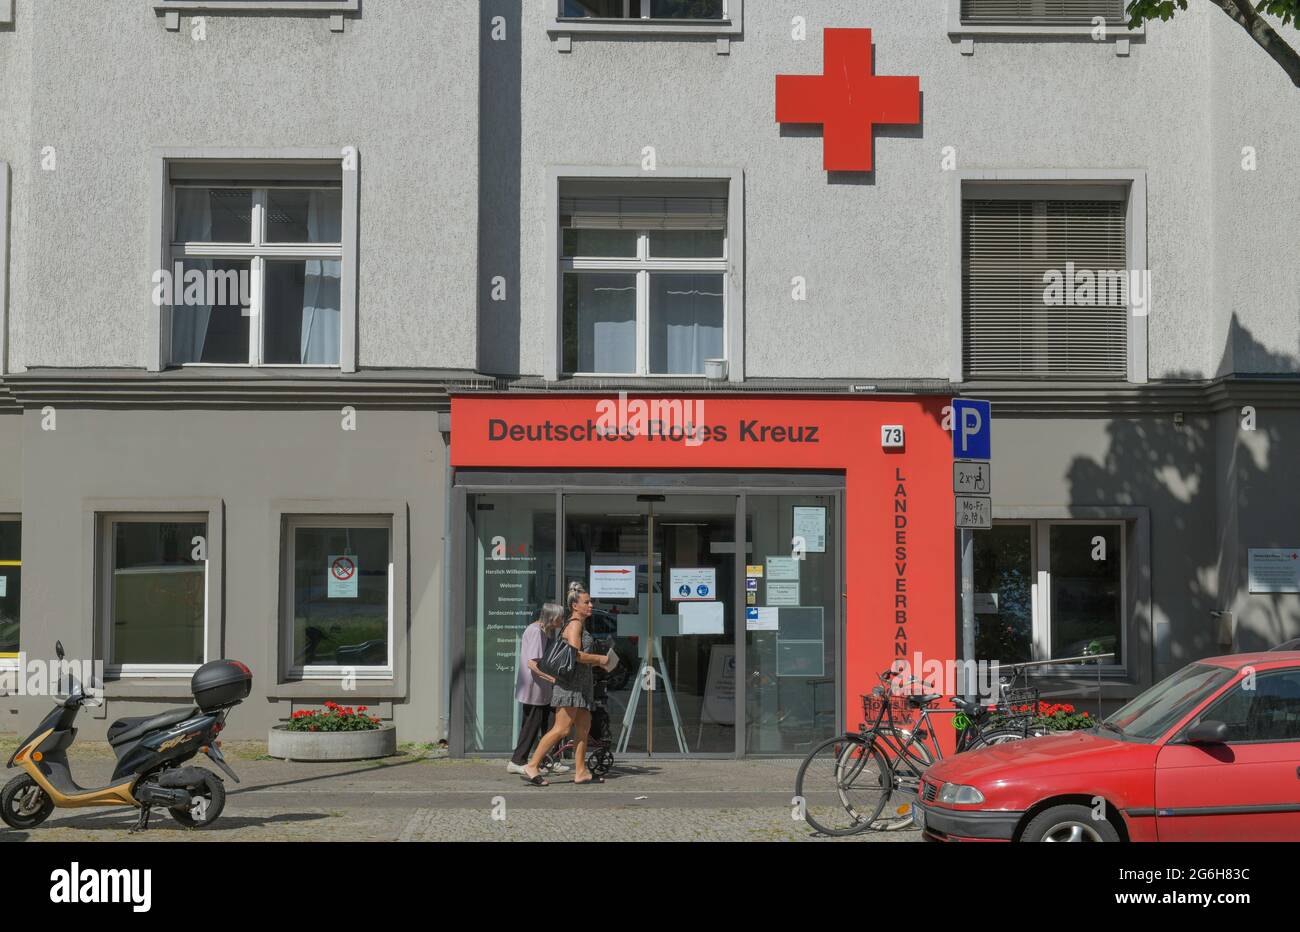 Landesverband Berliner Rotes Kreuz, Bundesallee, Friedenau, Schöneberg,  Berlin, Deutschland Stock Photo - Alamy